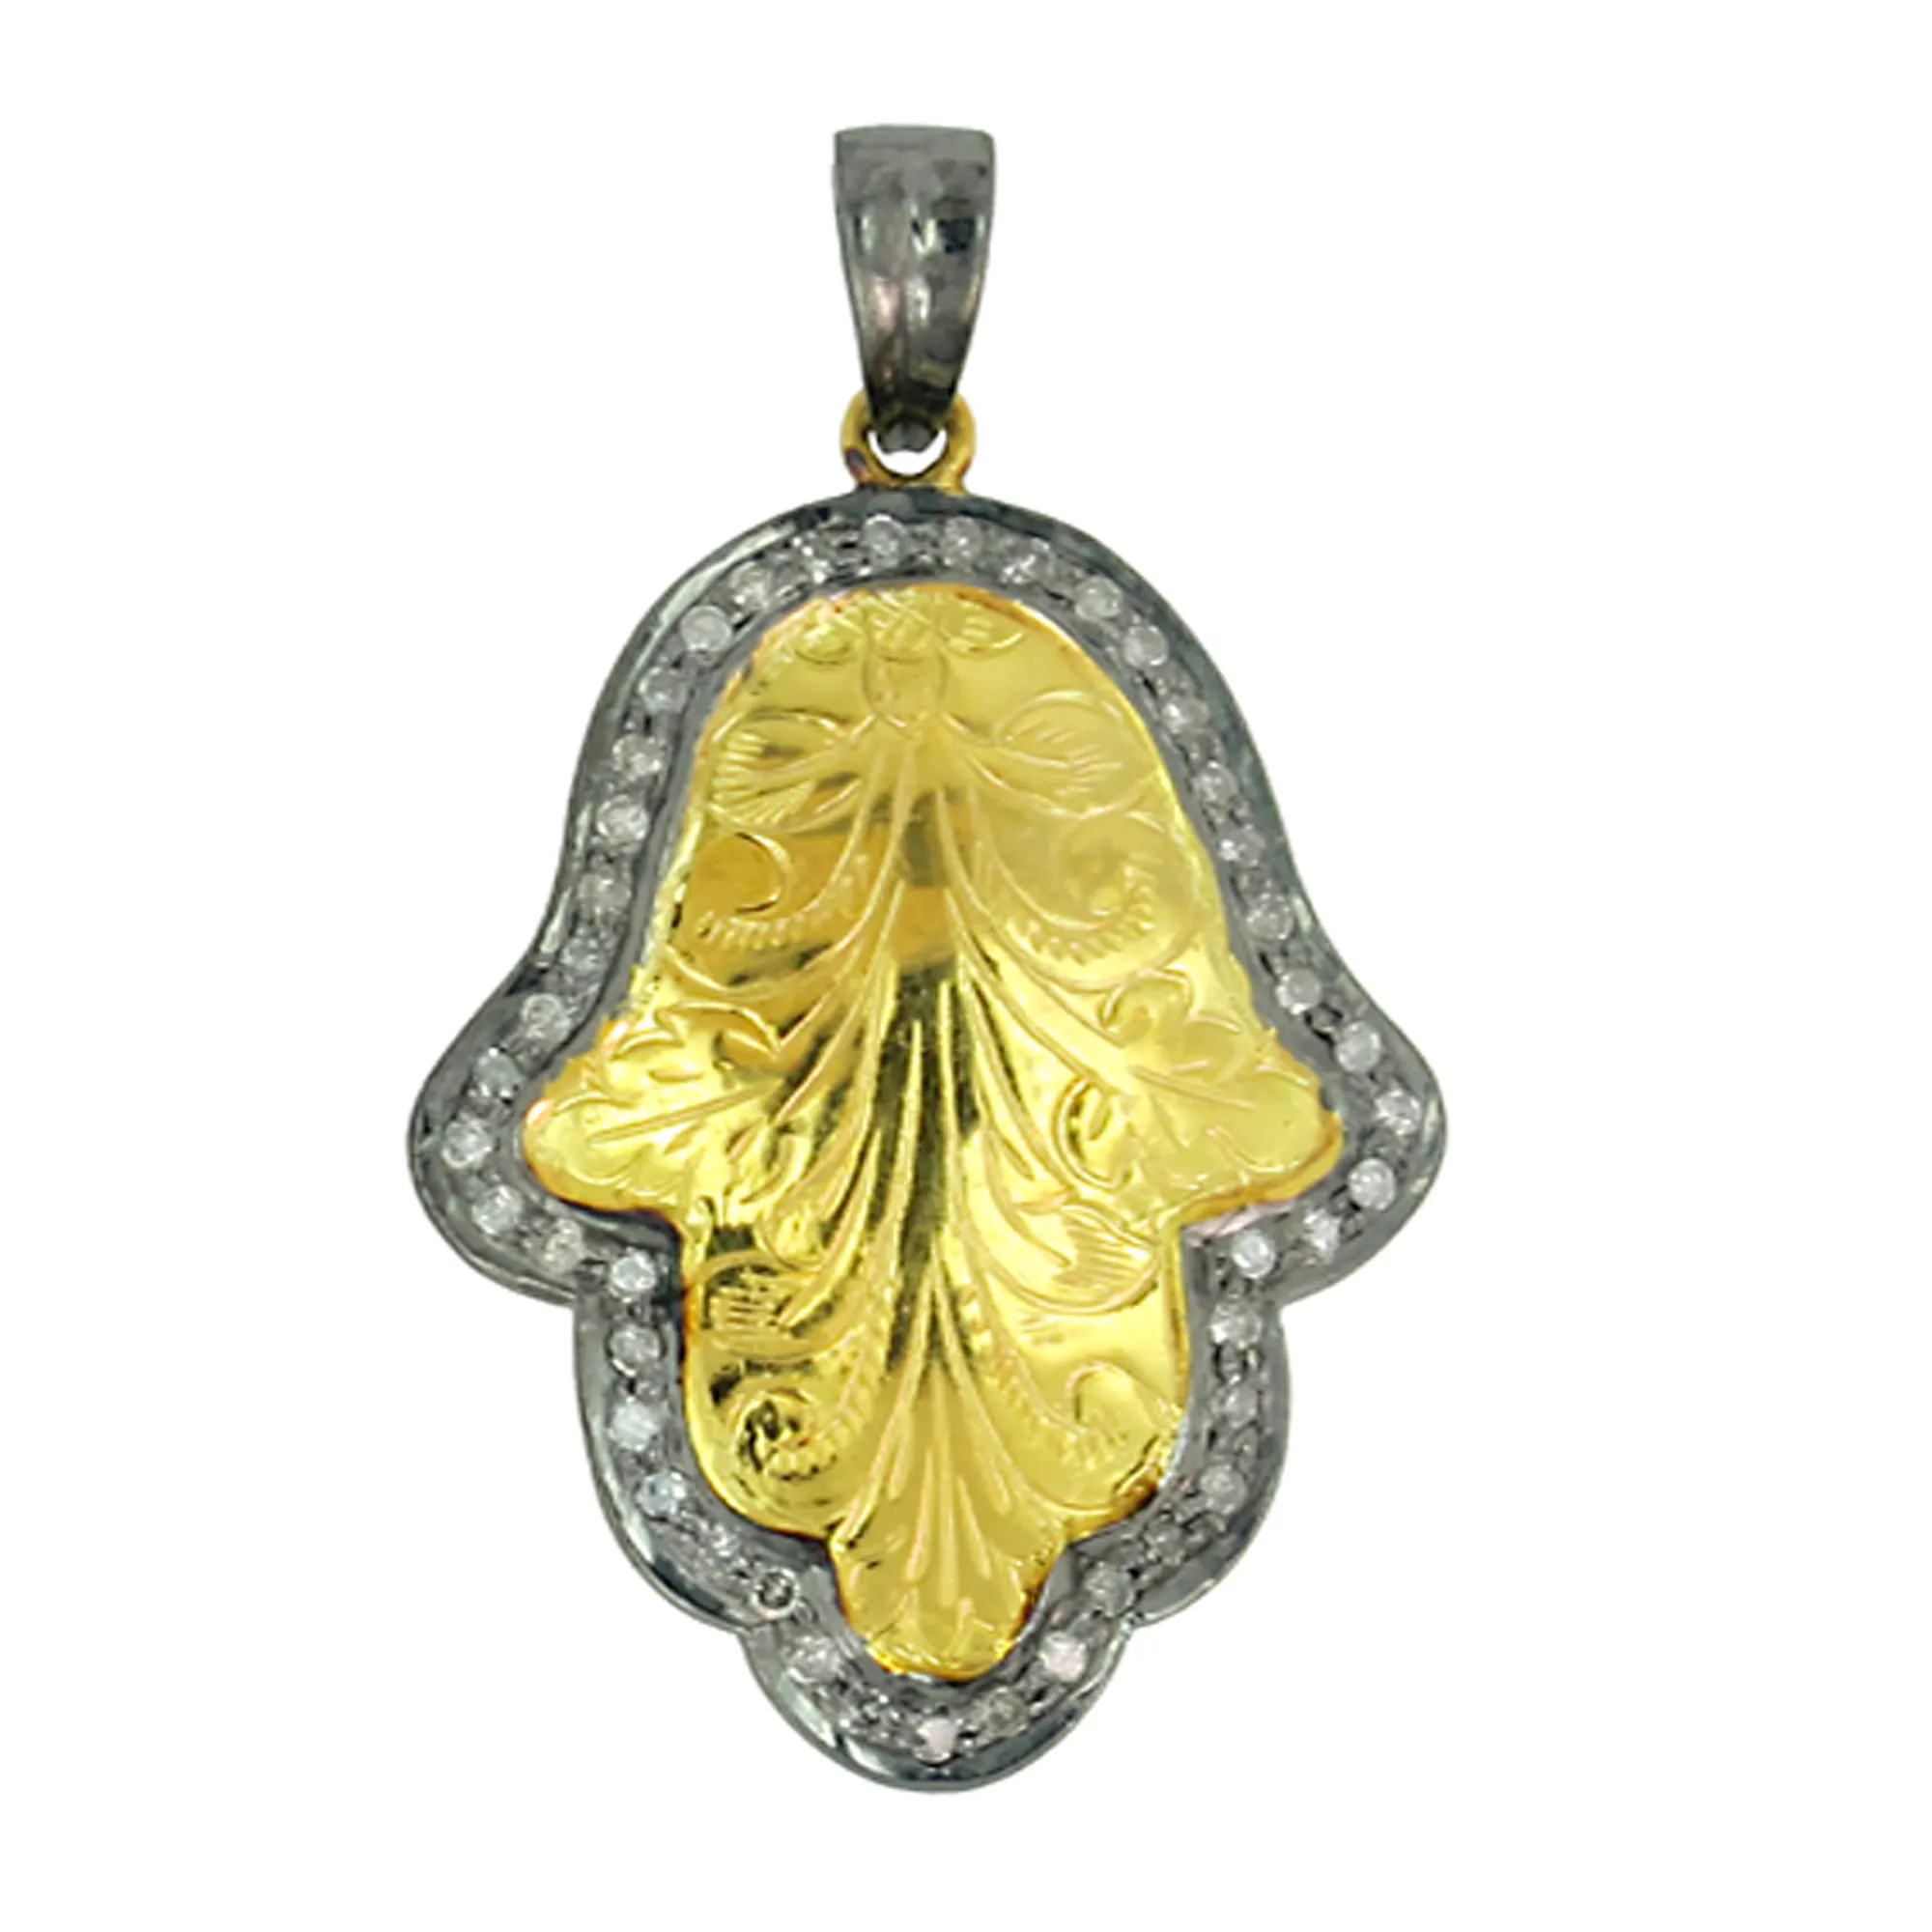 Real Pave Diamond Sterling Silver Engrave Design Hamsa Hand Pendant Jewelry Handmade 14K Yellow Gold Hamsa Pendant Wholesaler